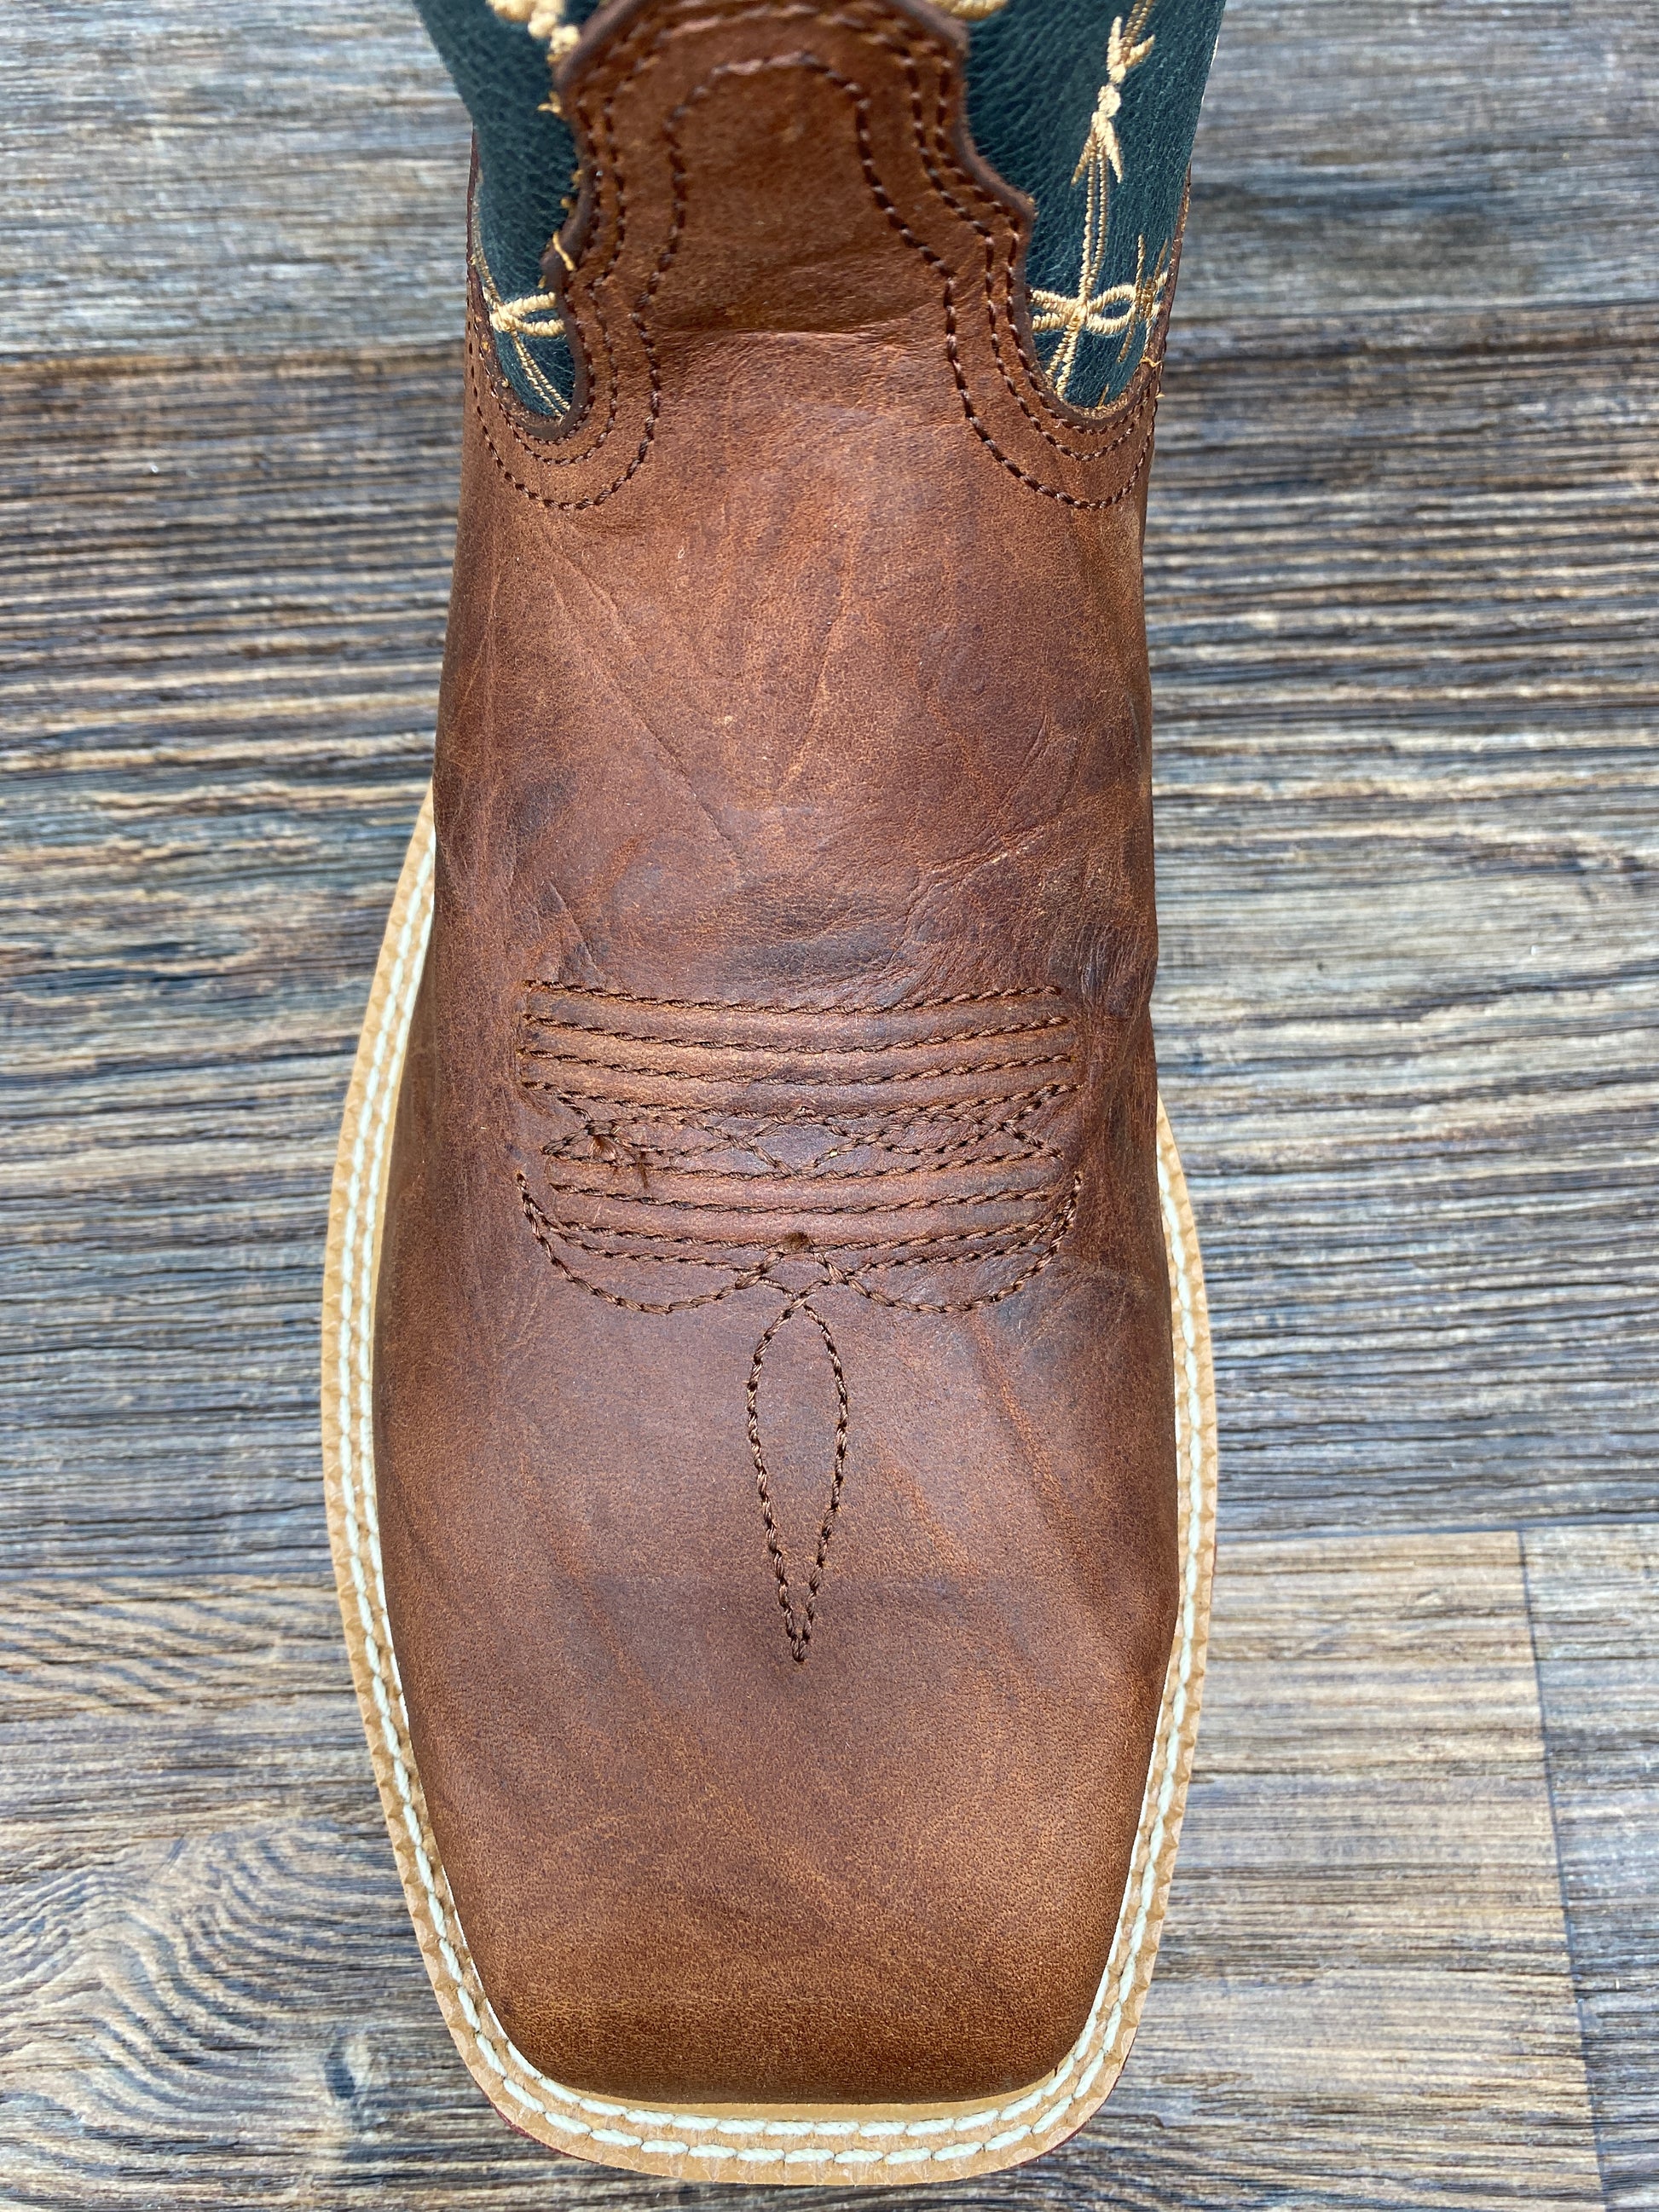 MXBN006 / Men's Nano Safety Toe Western Work Boot – Bucksworth Western Wear